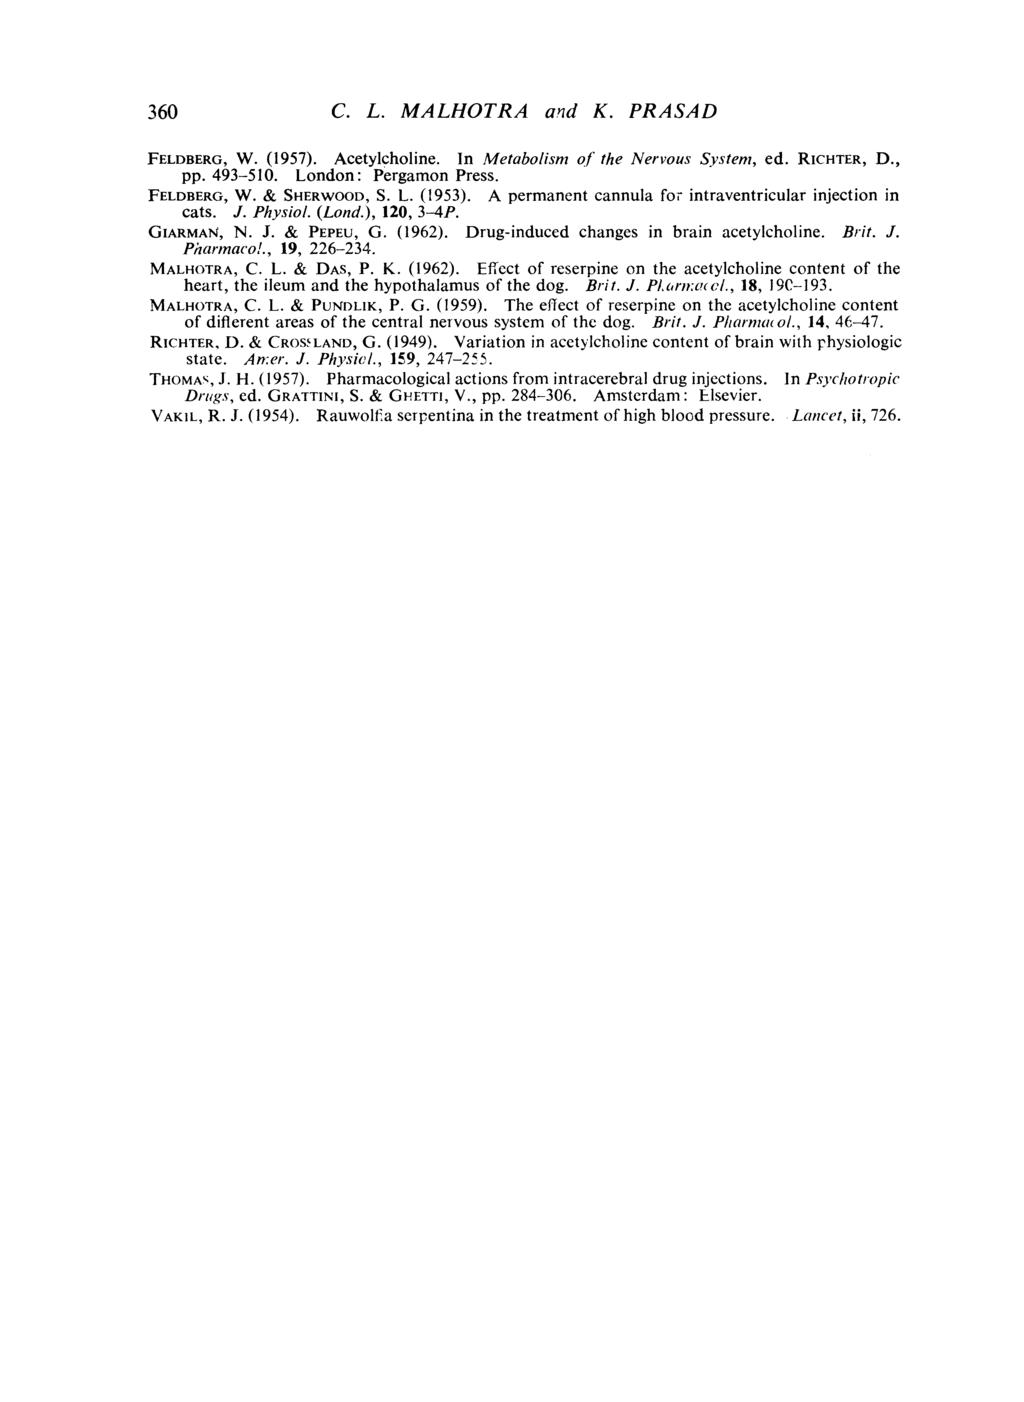 360 C. L. MALHOTRA and K. PRASAD FELDBERG, W. (1957). Acetylcholine. In Metabolism of the Nervous System, ed. RICHTER, D., pp. 493-510. London: Pergamon Press. FELDBERG, W. & SHERWOOD, S. L. (1953).